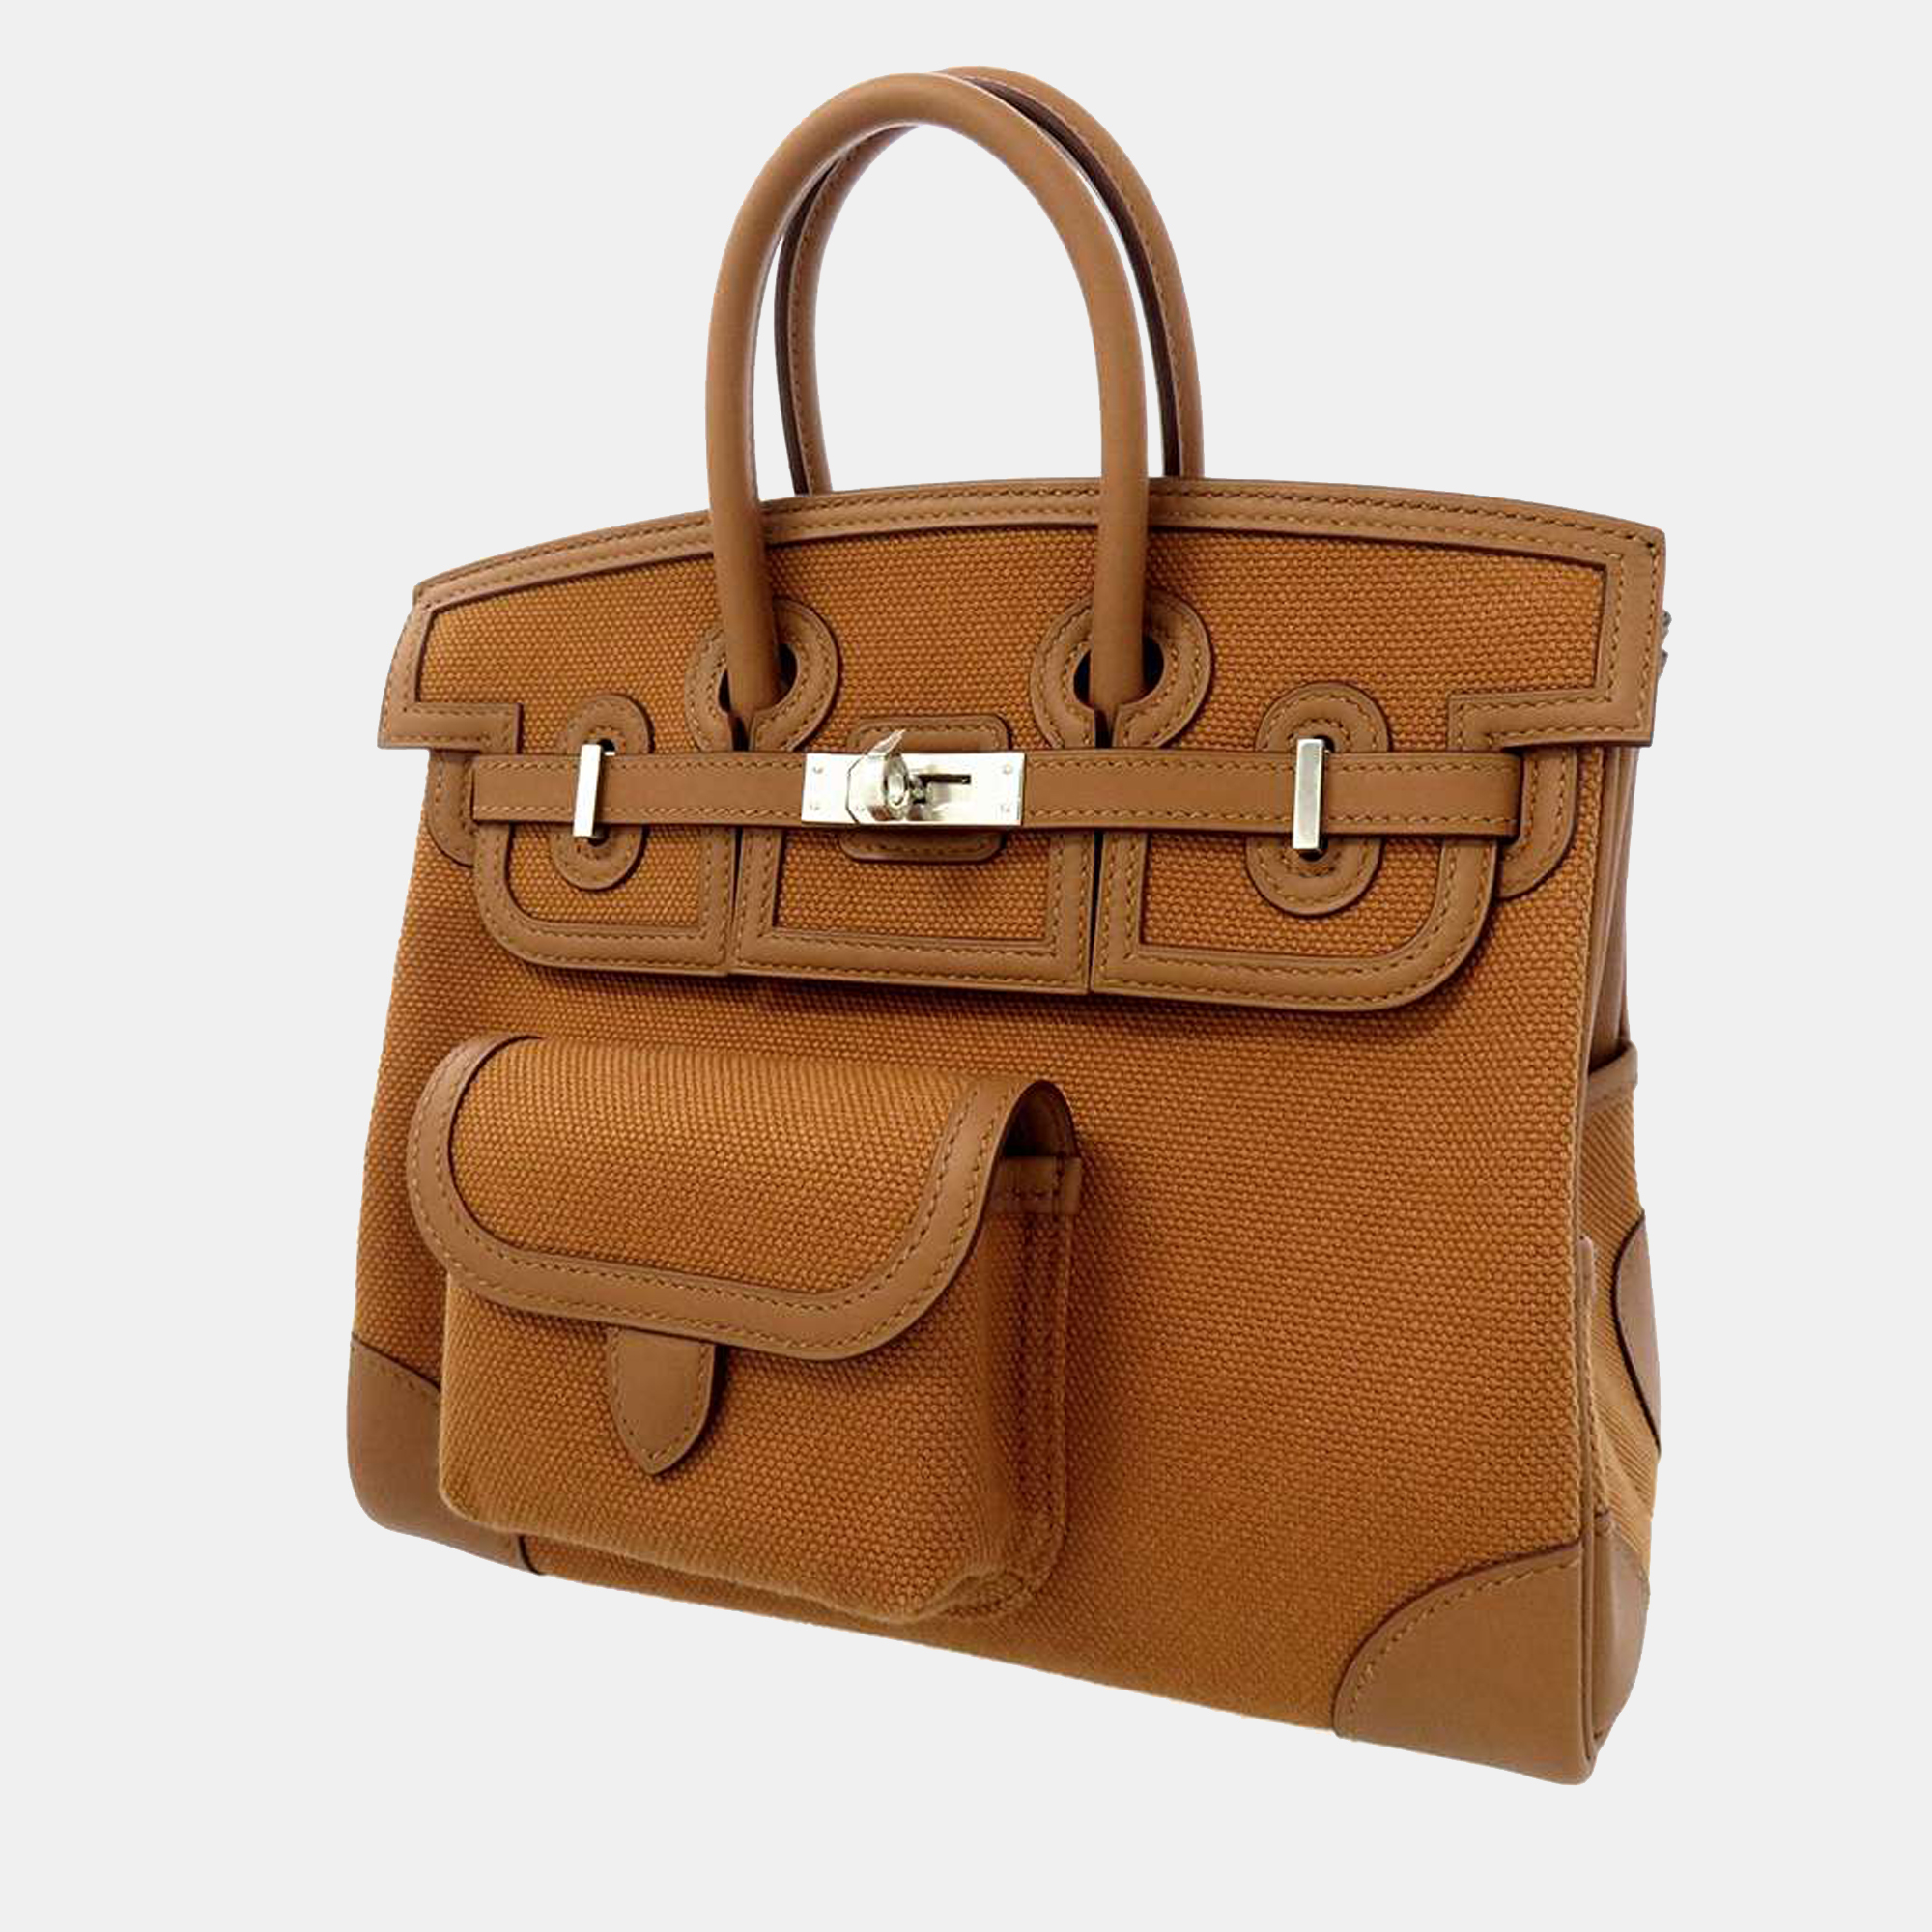 Hermes Birkin 25 Cargo Handbag